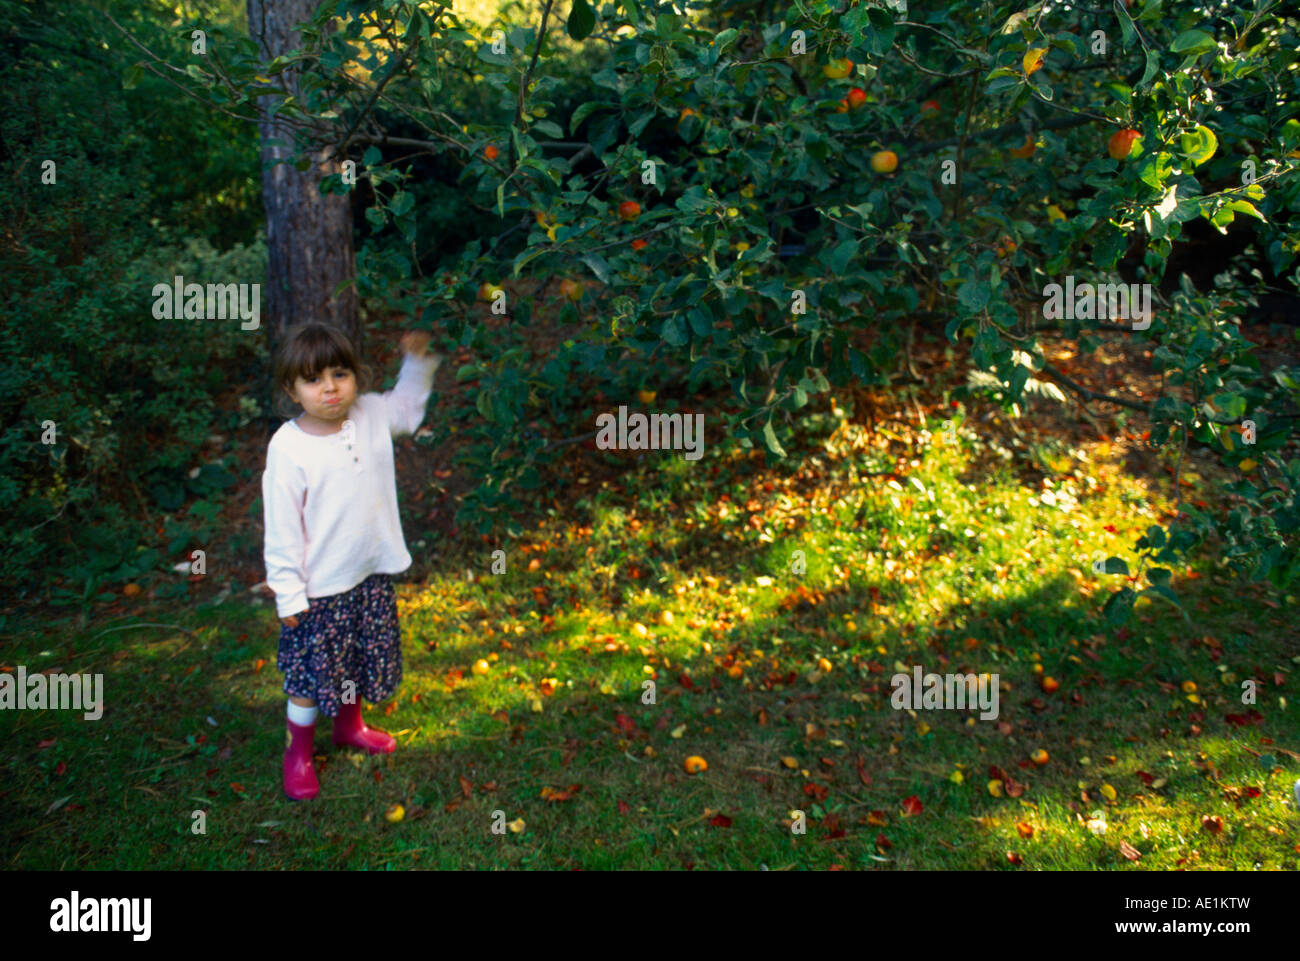 Kinder pflücken Äpfel & Äpfel bereits unter Baum gefallen Stockfoto